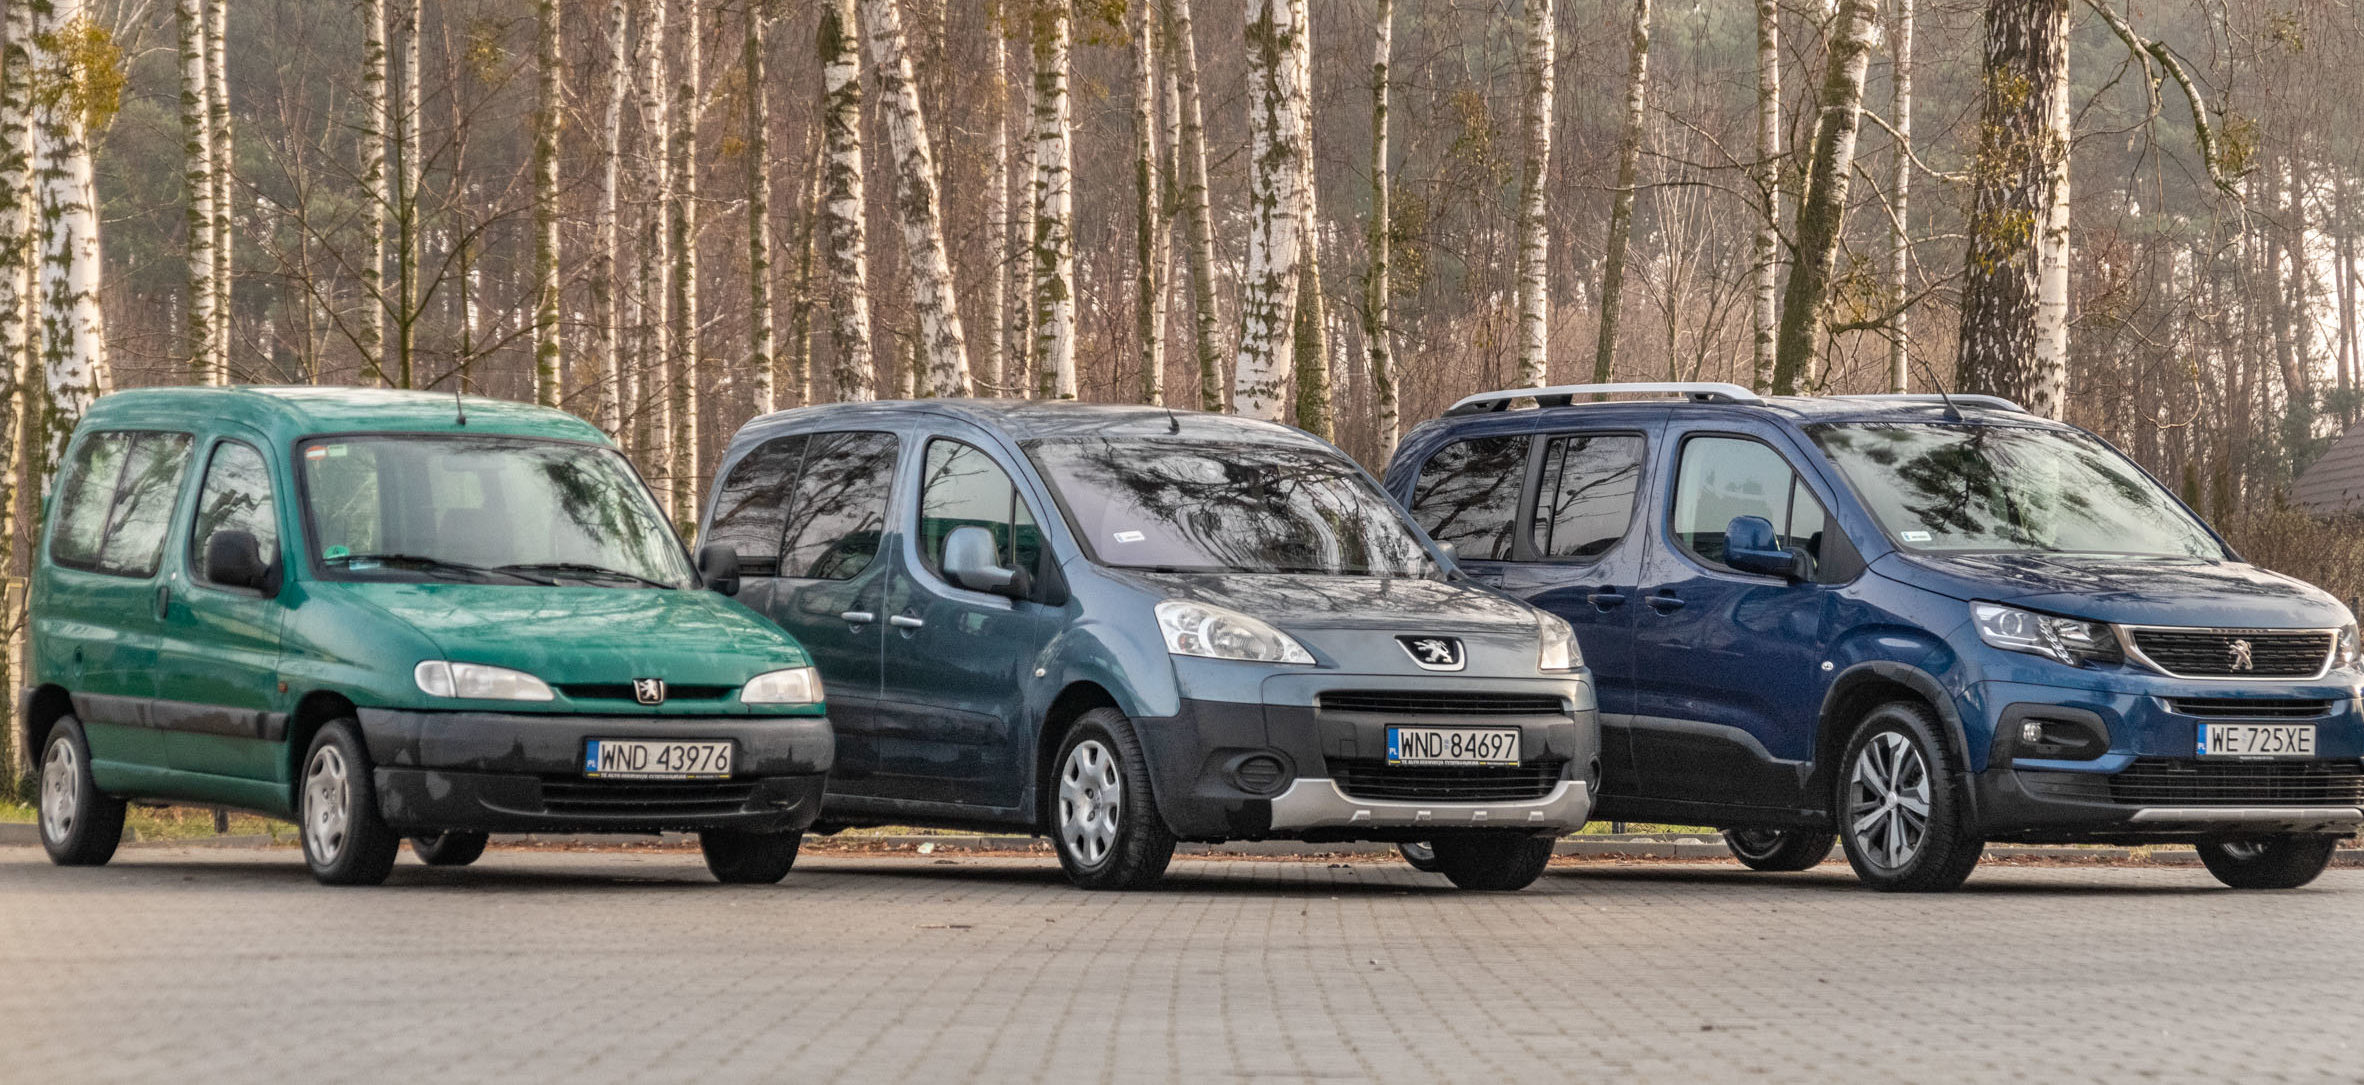 Diferencias entre Peugeot Partner y Peugeot Rifter - Clicars Blog